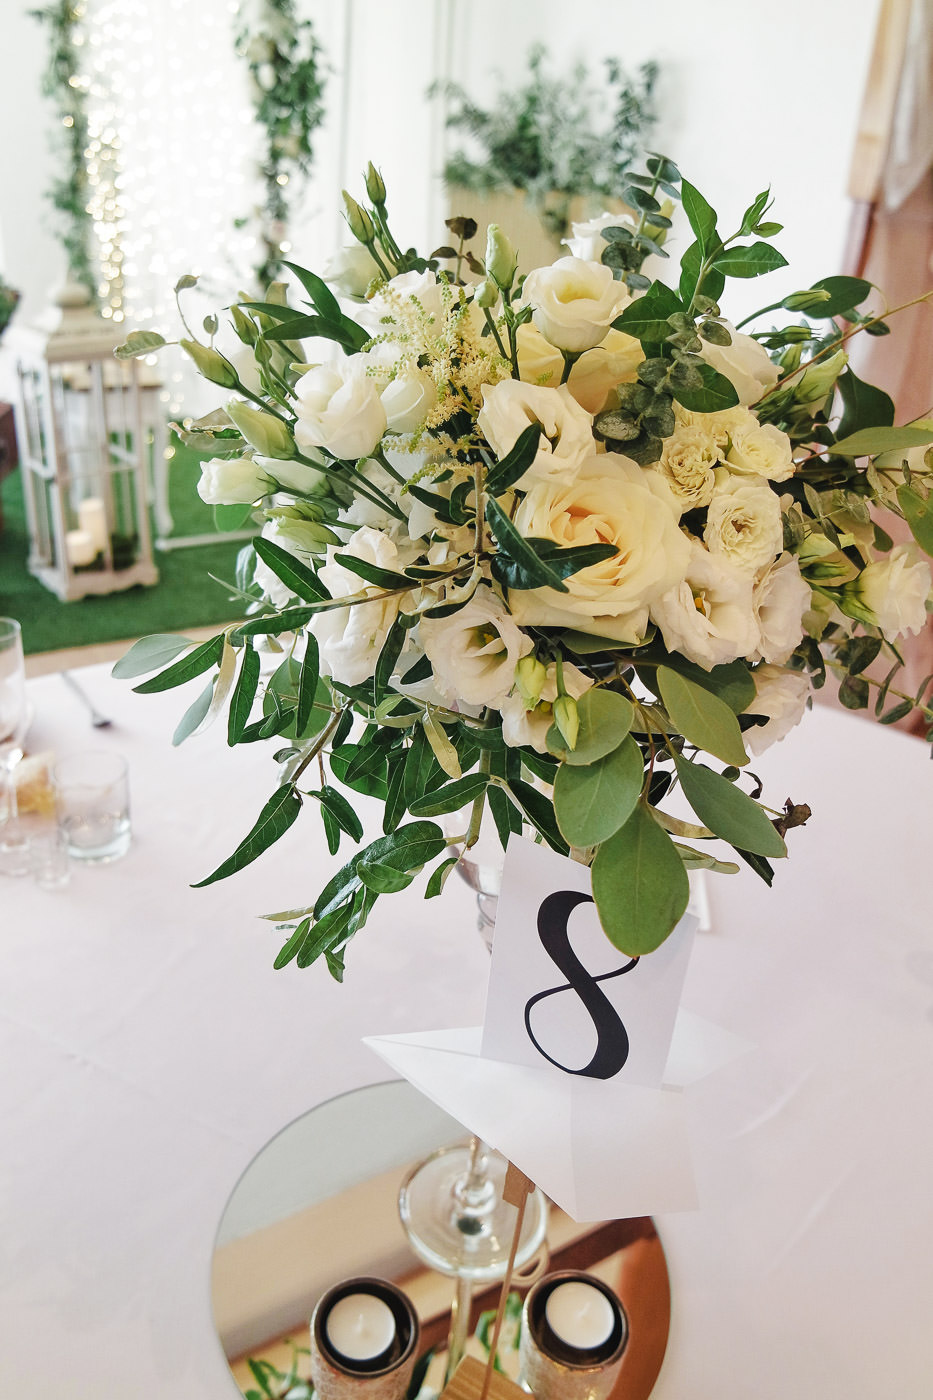 Susan&Sis decor svadobna vyzdoba – dekorovanie- white&green, greenery svadobna vyzdoba, bielo zelena svadba, biele ruze, eukalypturs,